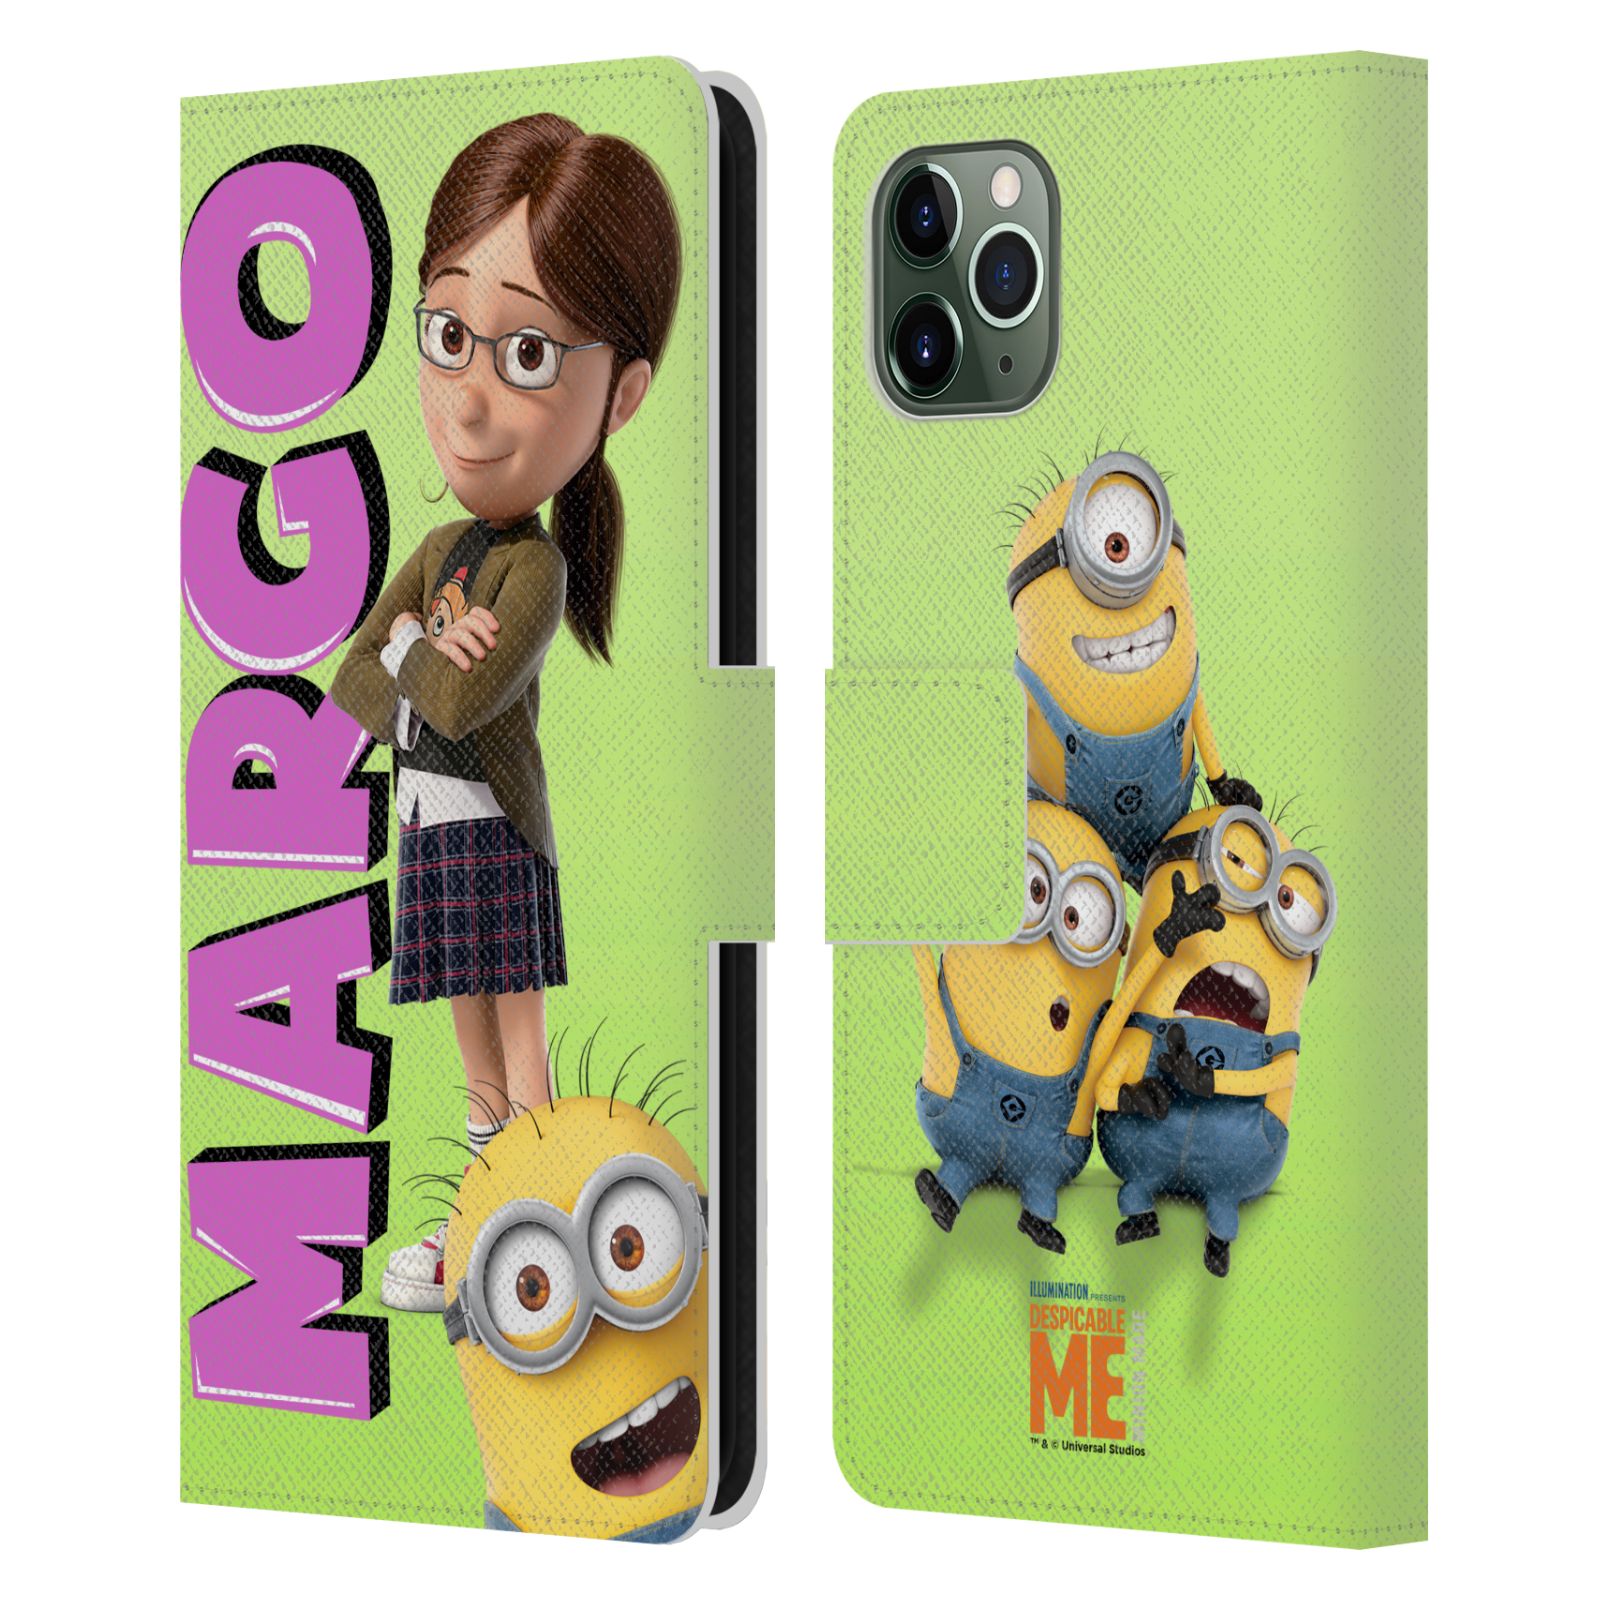 Pouzdro na mobil Apple Iphone 11 PRO MAX - Head Case - Margo a mimoni zelená